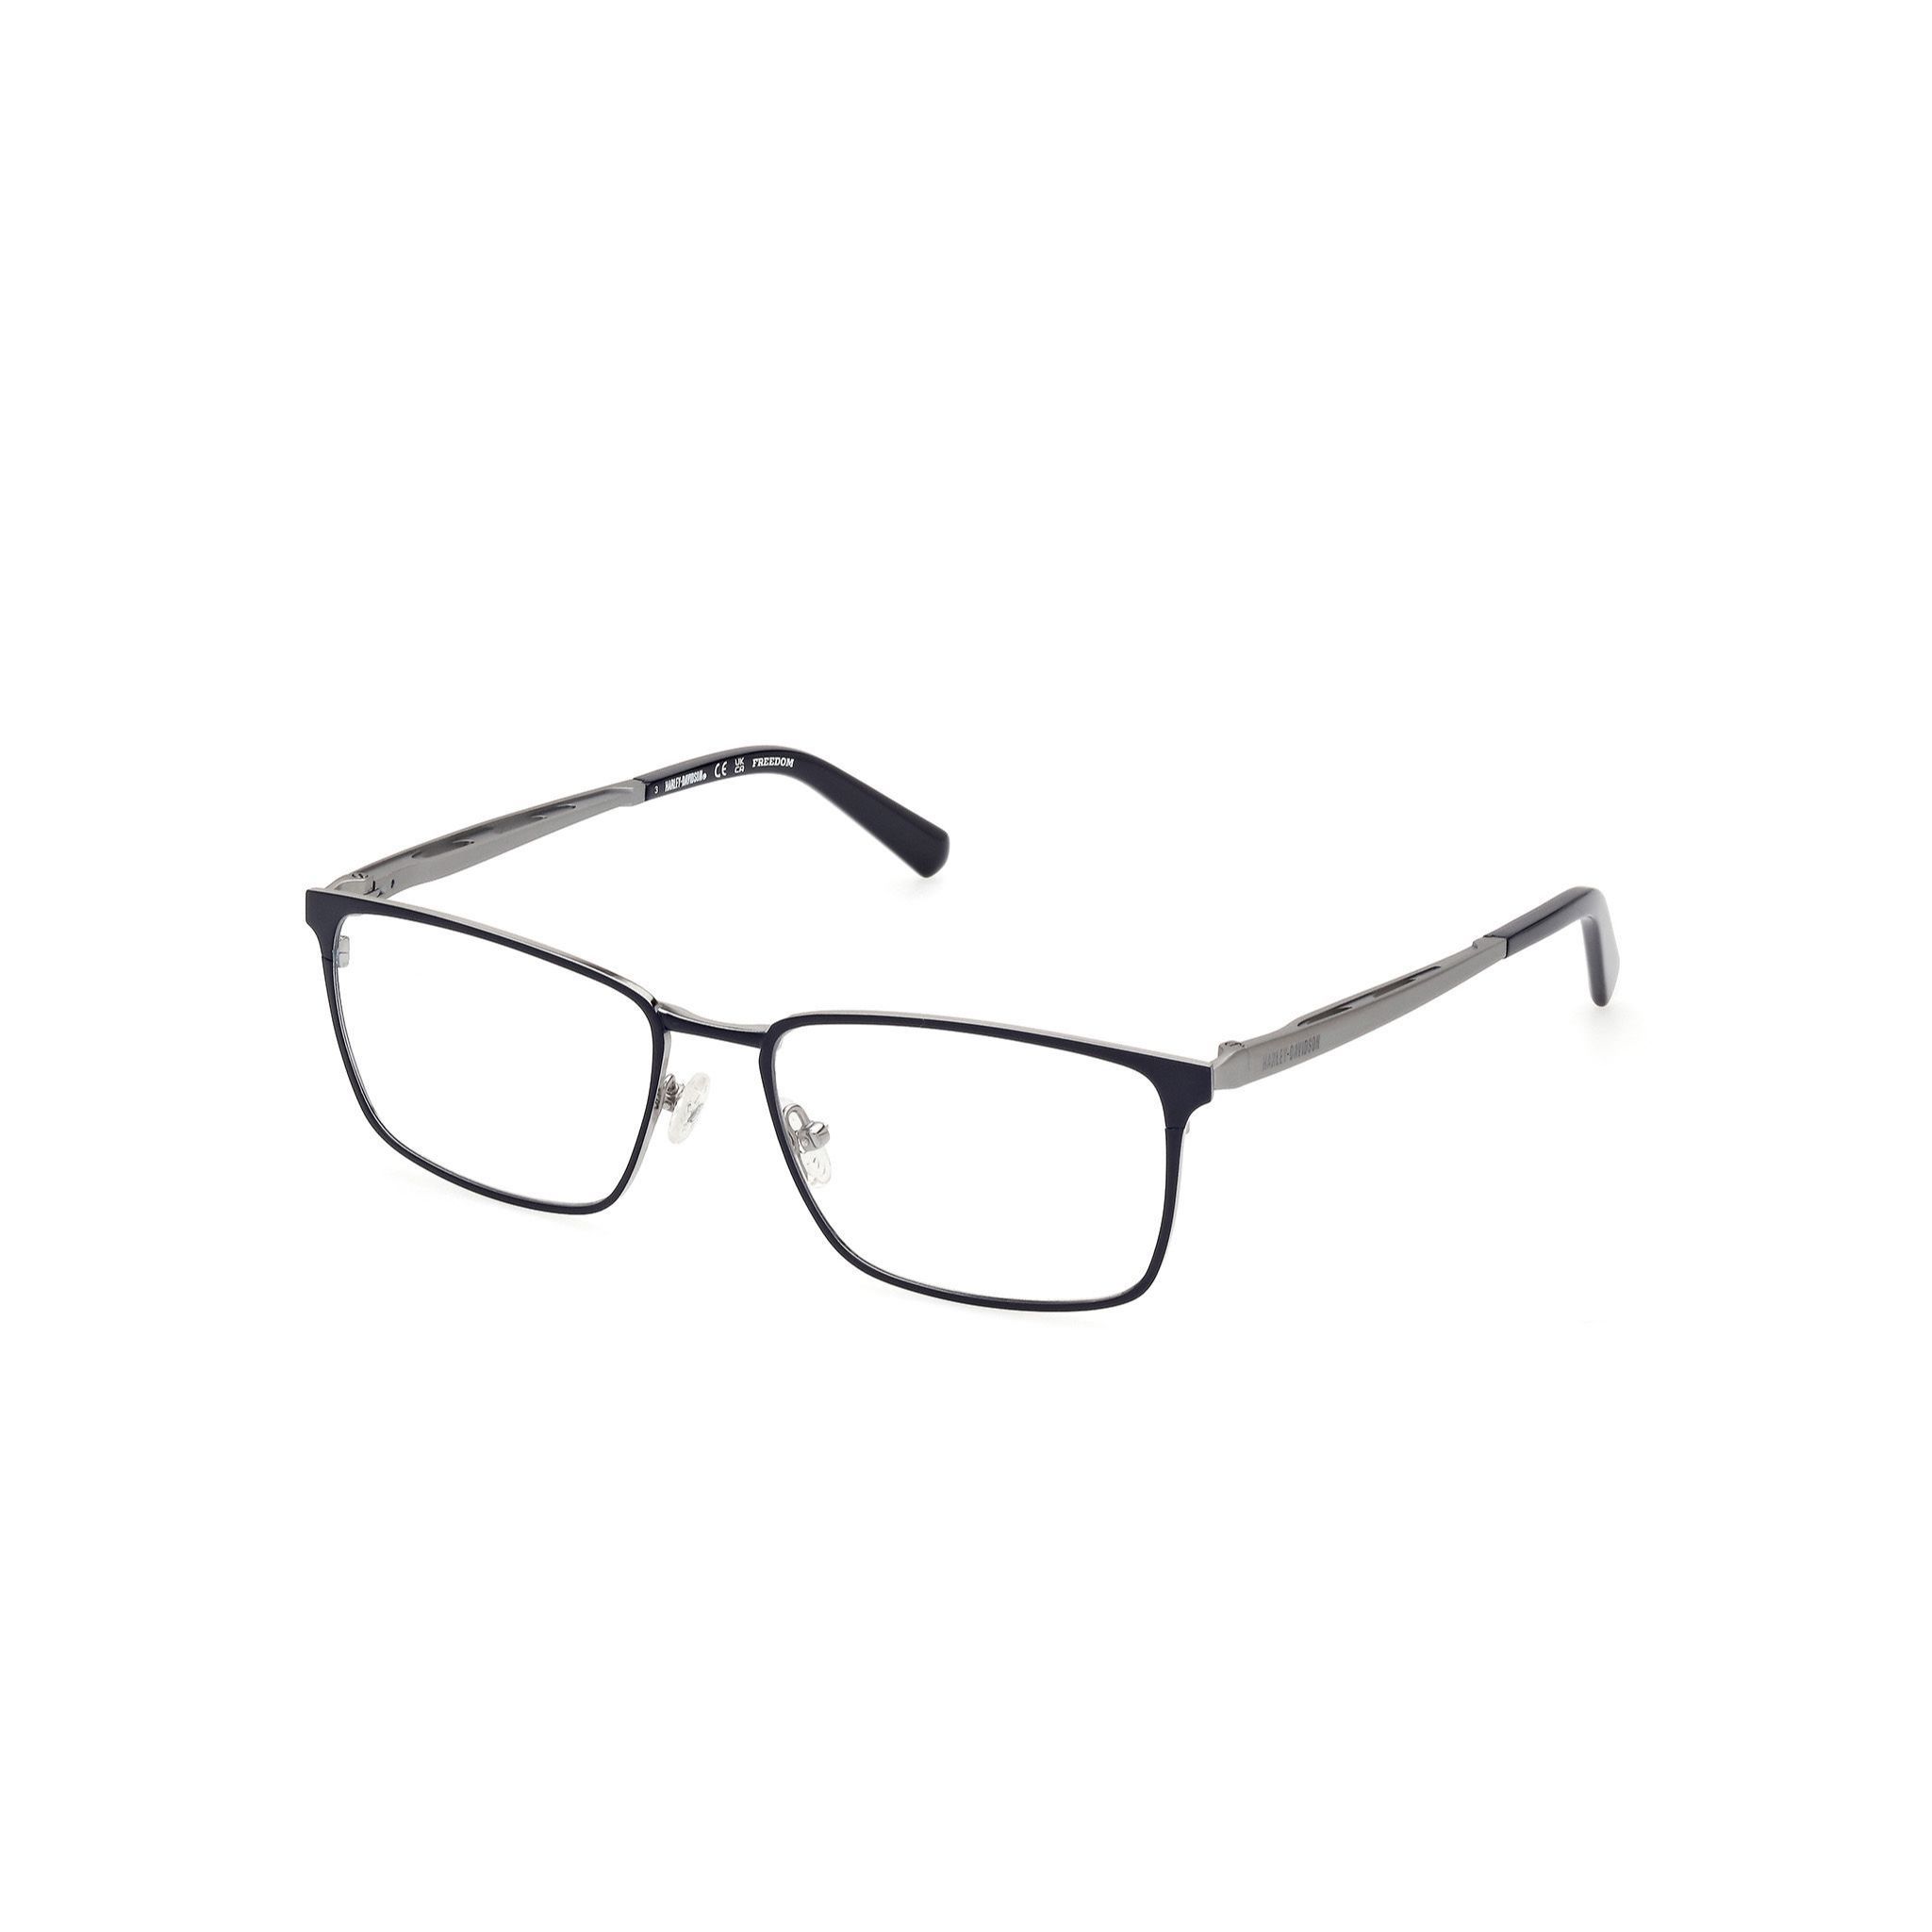 HD90280 Square Eyeglasses 91 - size  54